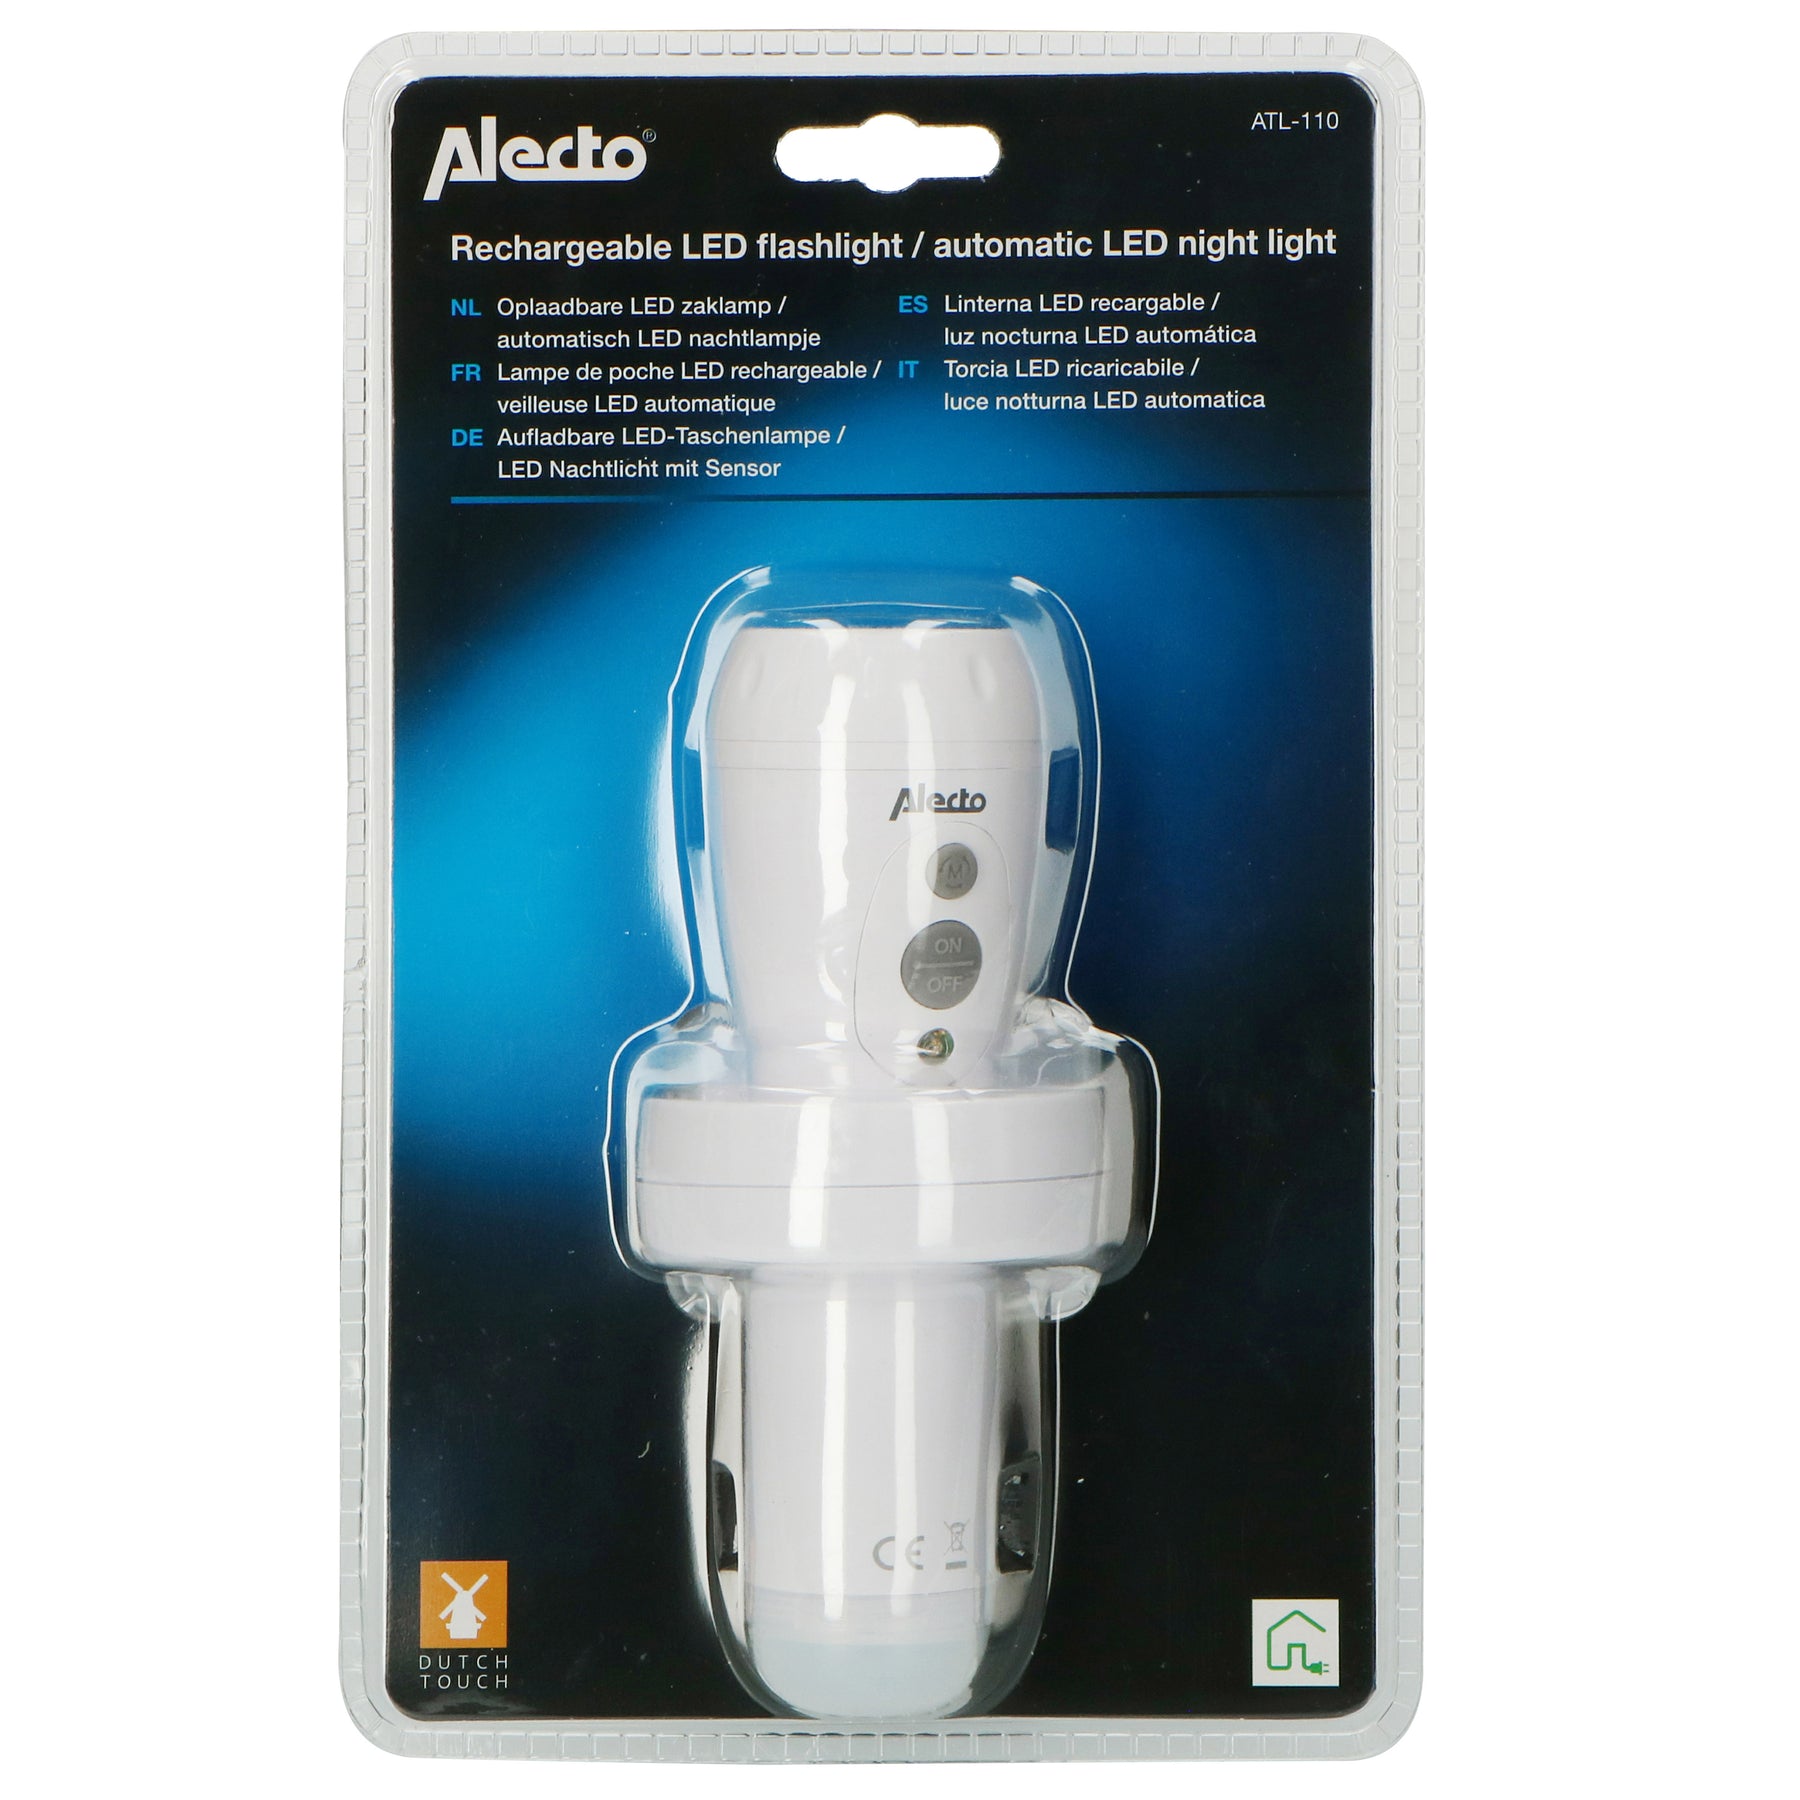 Afleiden verjaardag musicus Alecto ATL-110 - Oplaadbare LED zaklamp / automatisch LED nachtlampje, wit